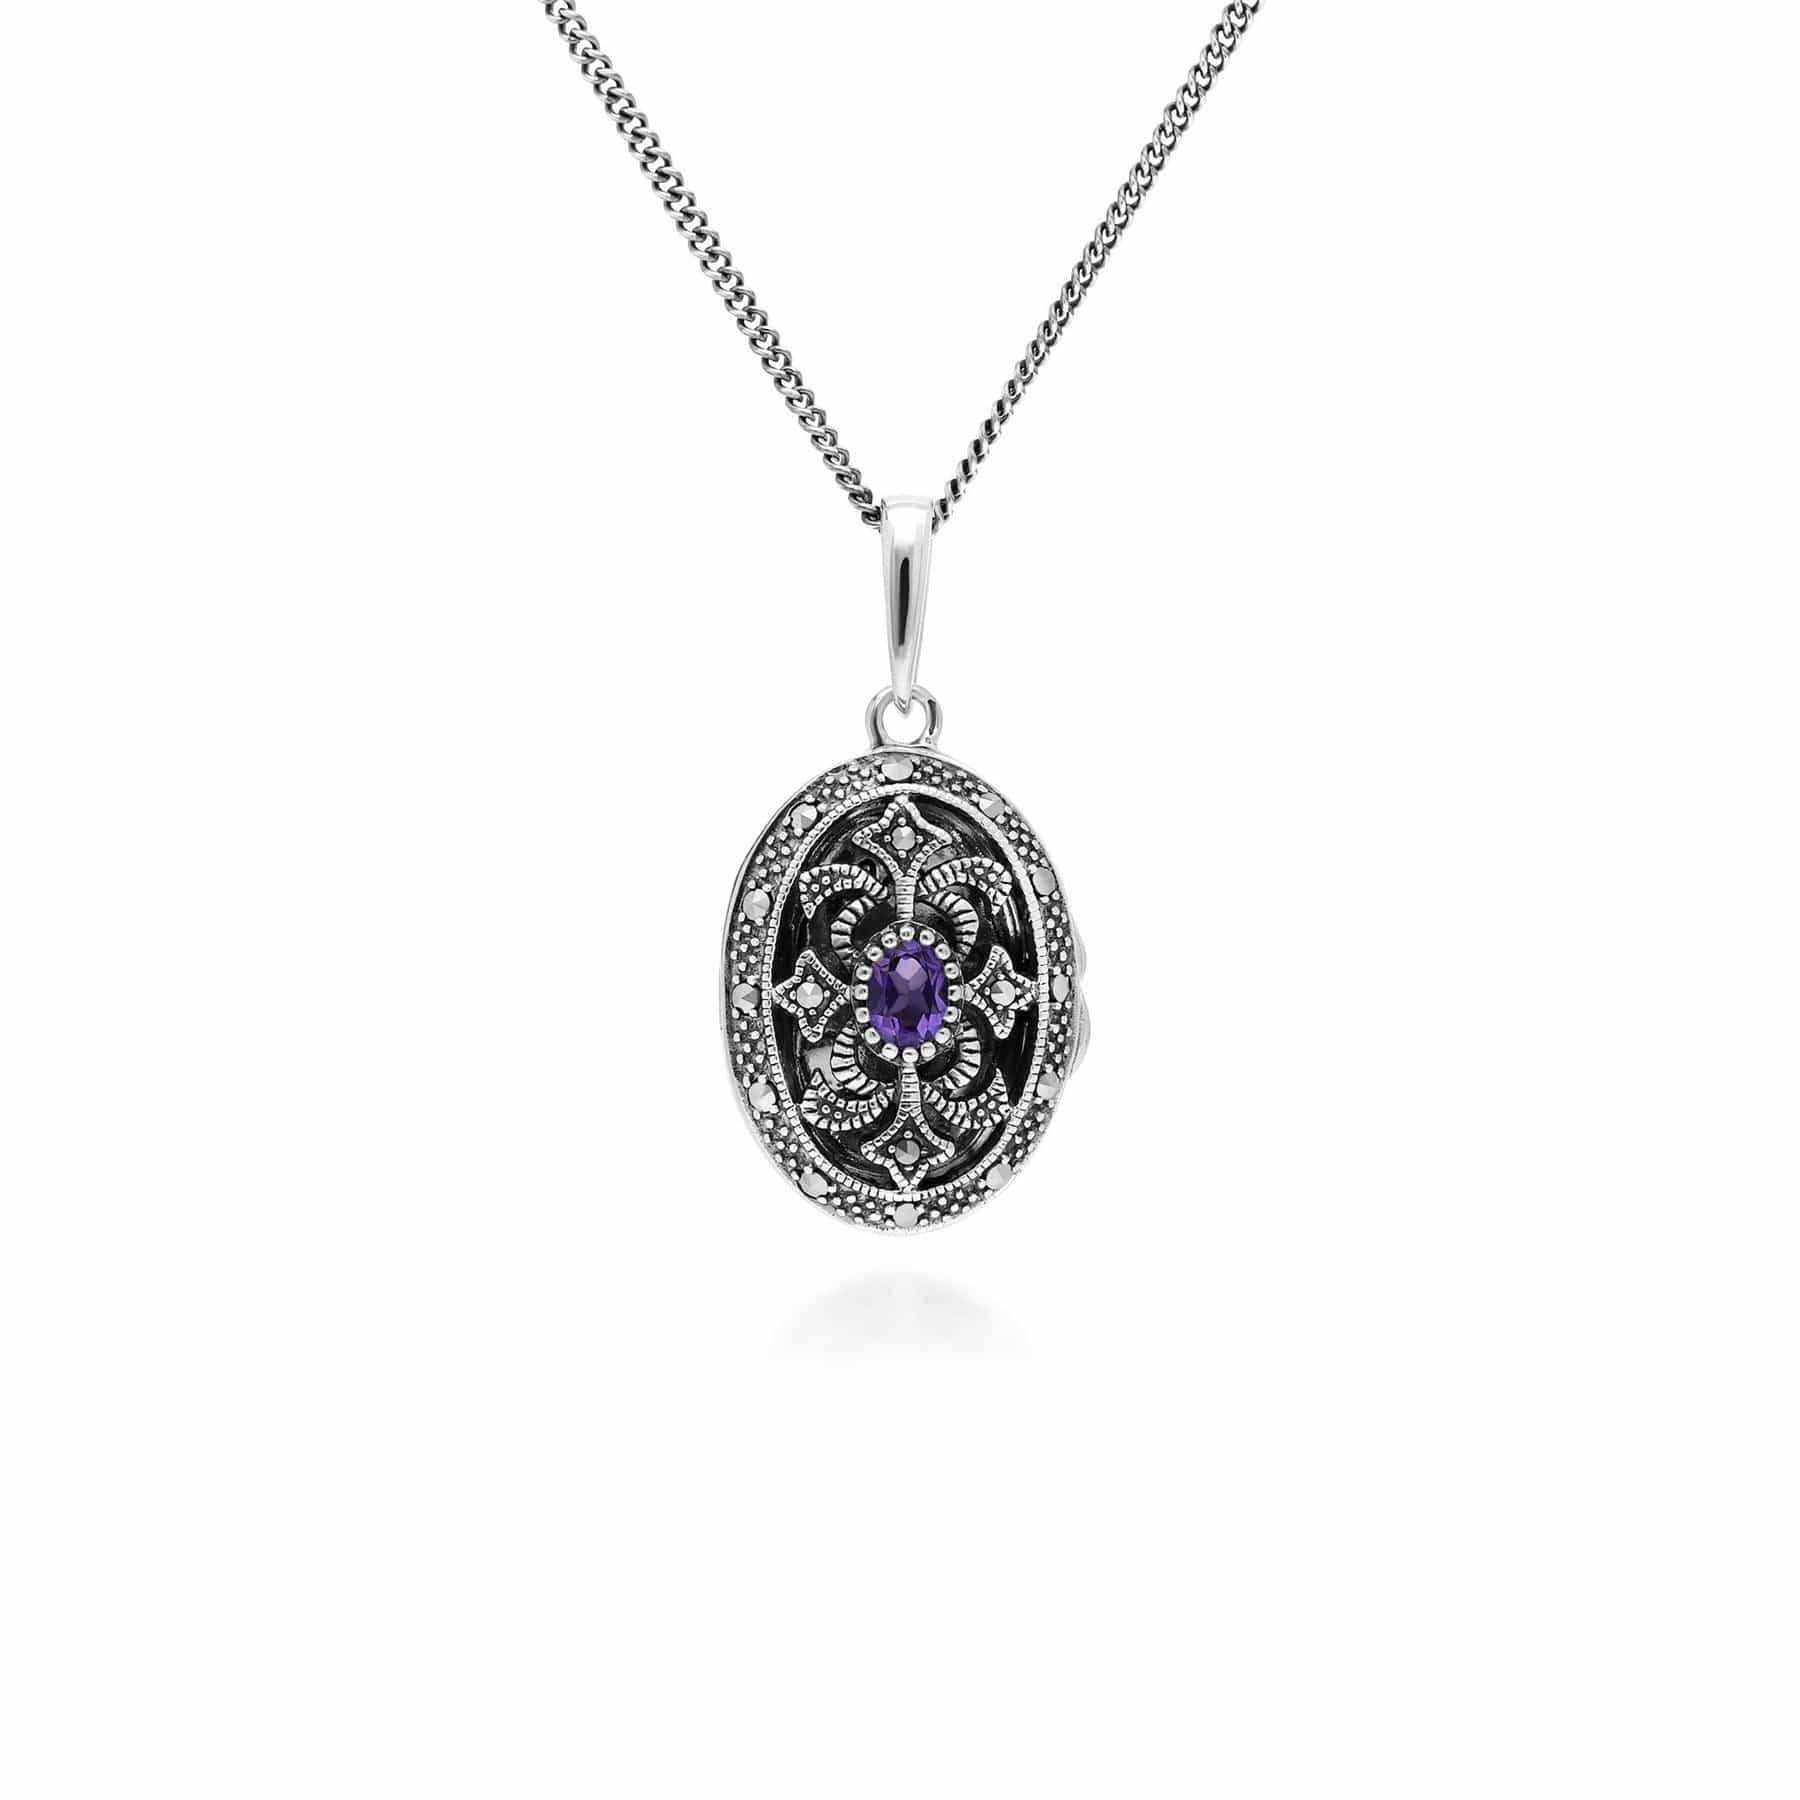 214N716205925 Art Nouveau Style Oval Amethyst & Marcasite Locket Necklace in 925 Sterling Silver 1